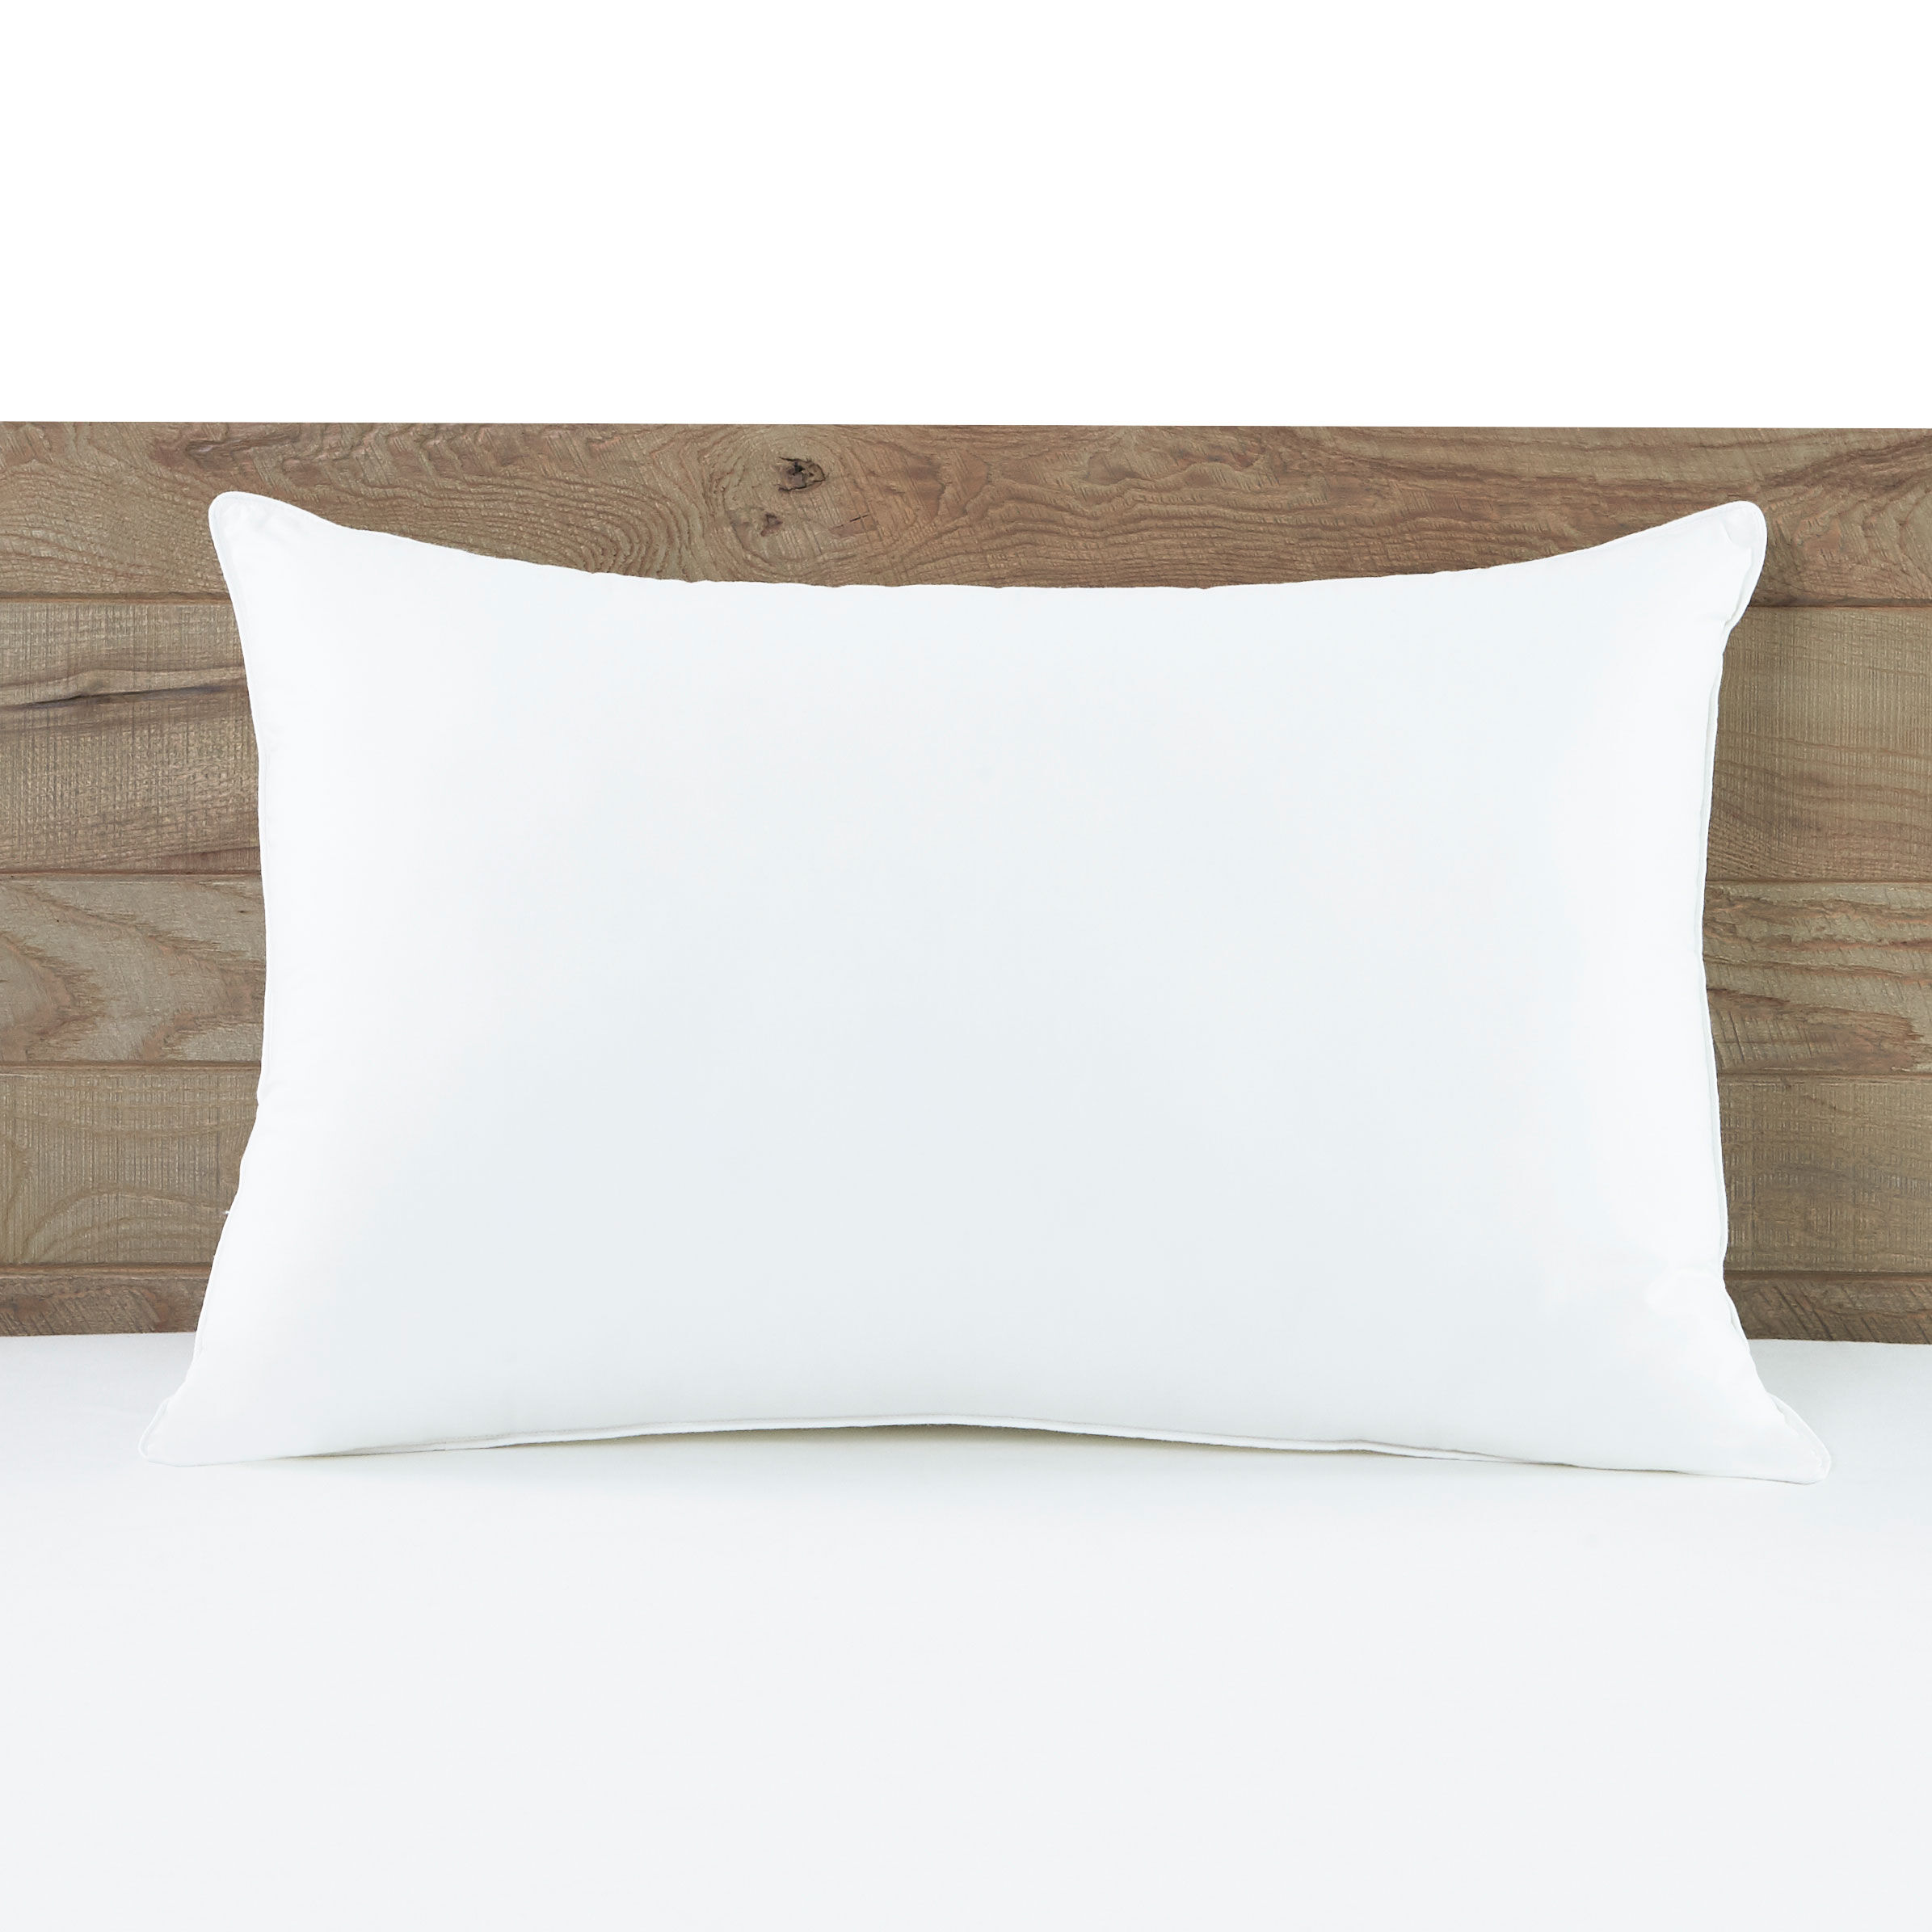 I AM Back Sleeper Pillow | Hollander Sleep Products